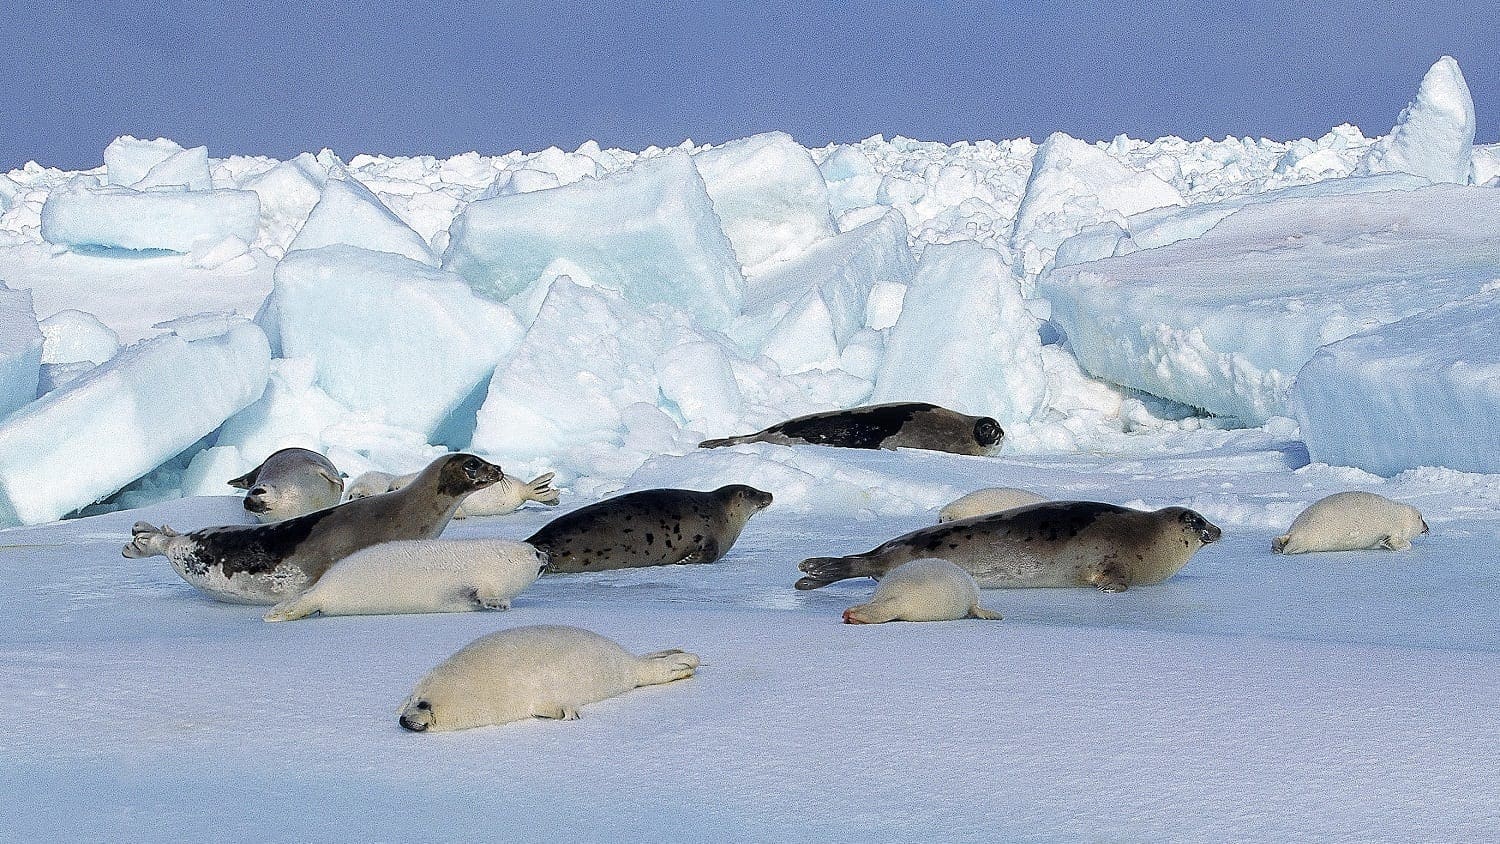 Harp seals on ice, Magdalena Island, CA: ID 194423155 © Slowmotiongli | Dreamstime.com